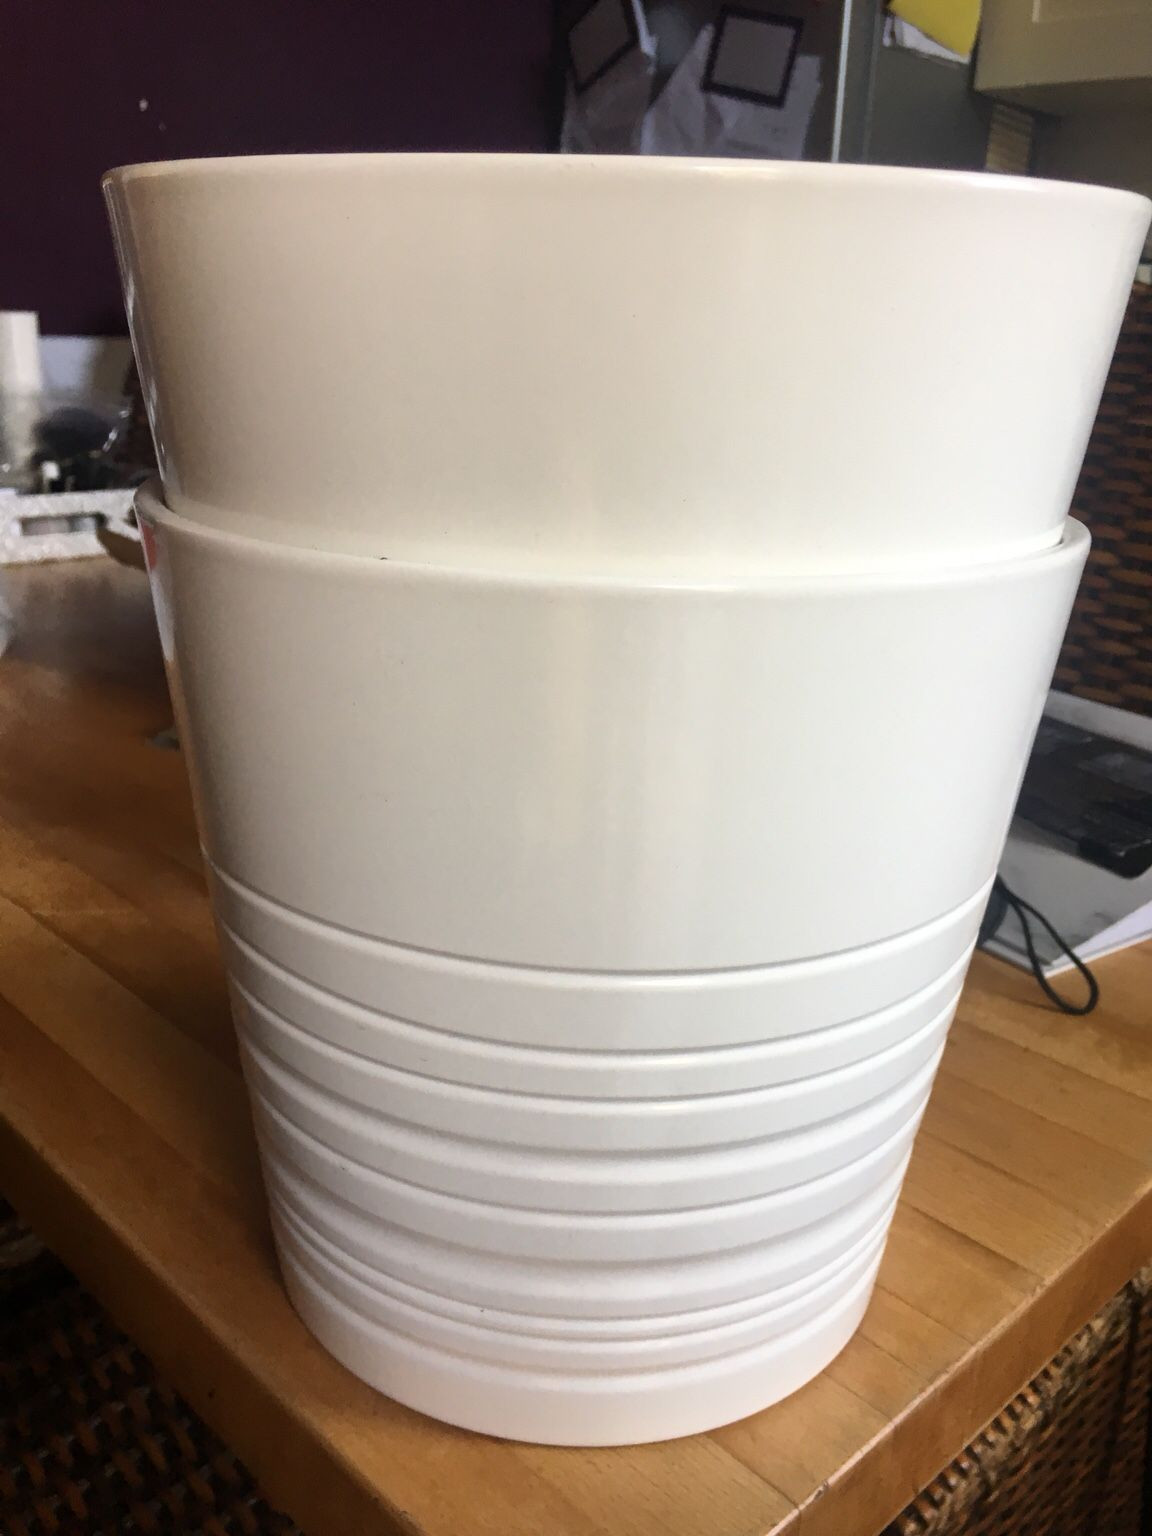 wedgwood vases for sale of https en shpock com i w1s48jmac2xsfir8 2018 07 22t190400 02 regarding 2 white plant pots 7d6d7db1